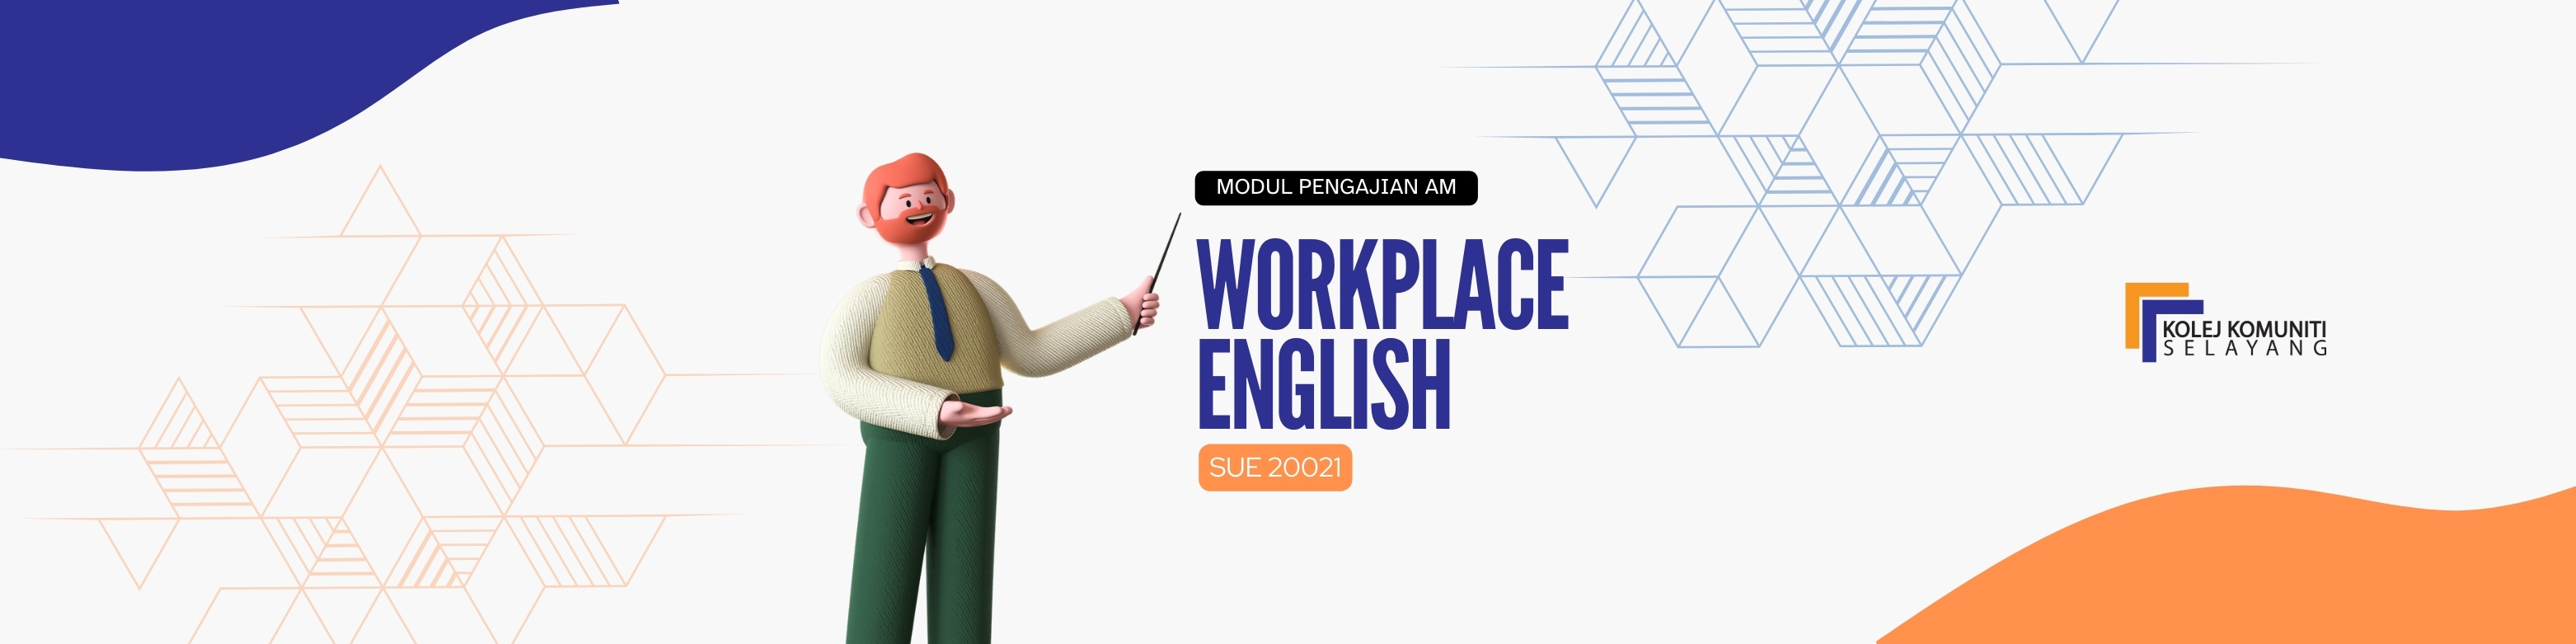 SUE20021 - WORKPLACE ENGLISH